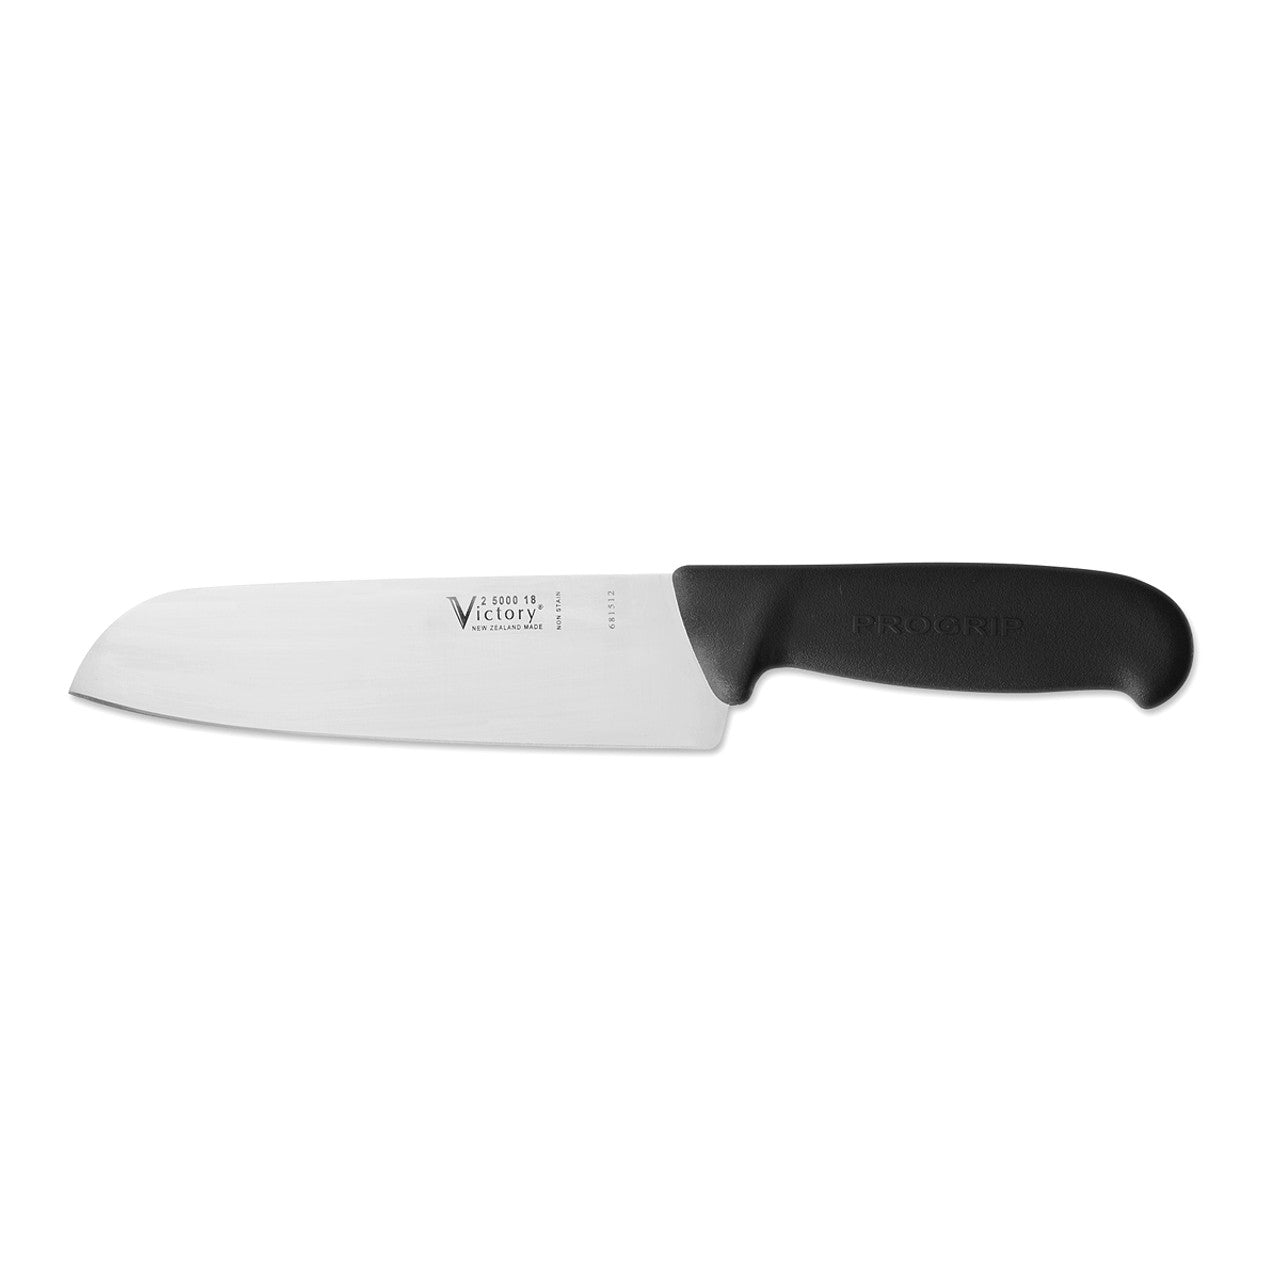 Victory santoku chefs knife 18cm